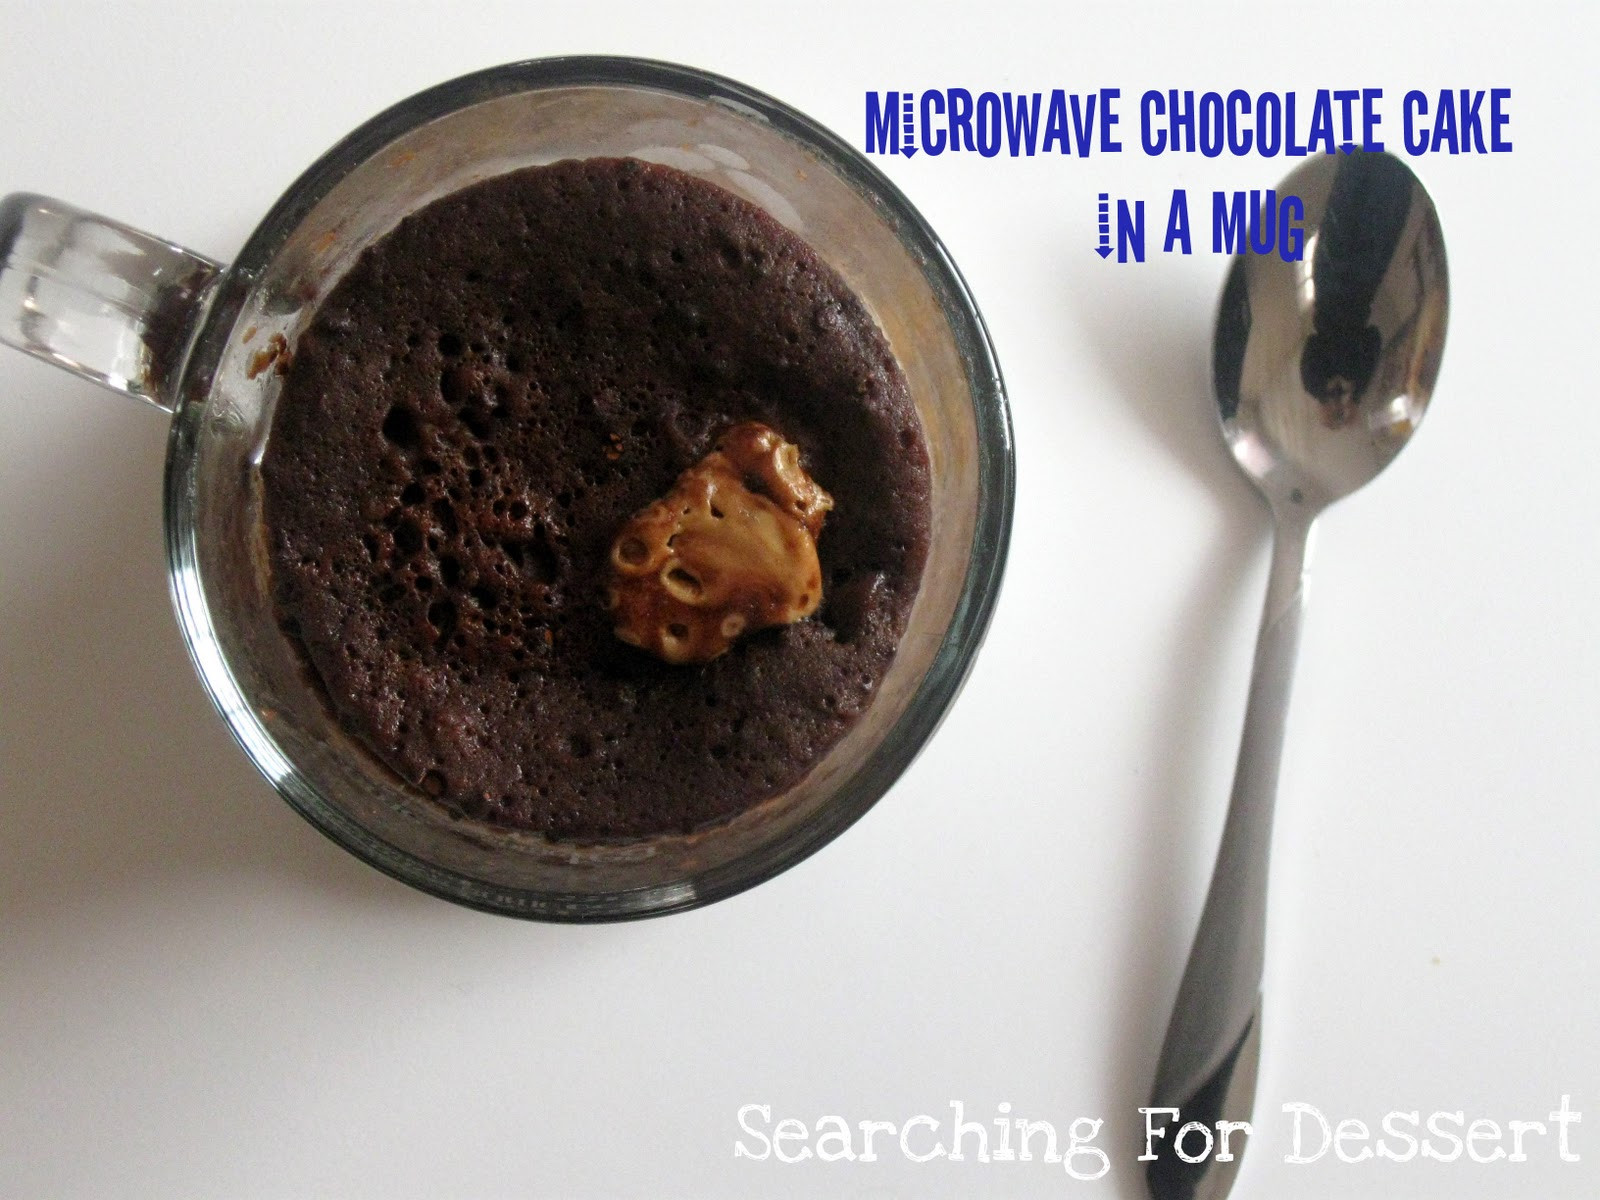 Microwave Dessert In A Mug
 Microwave Chocolate Cake in a Mug